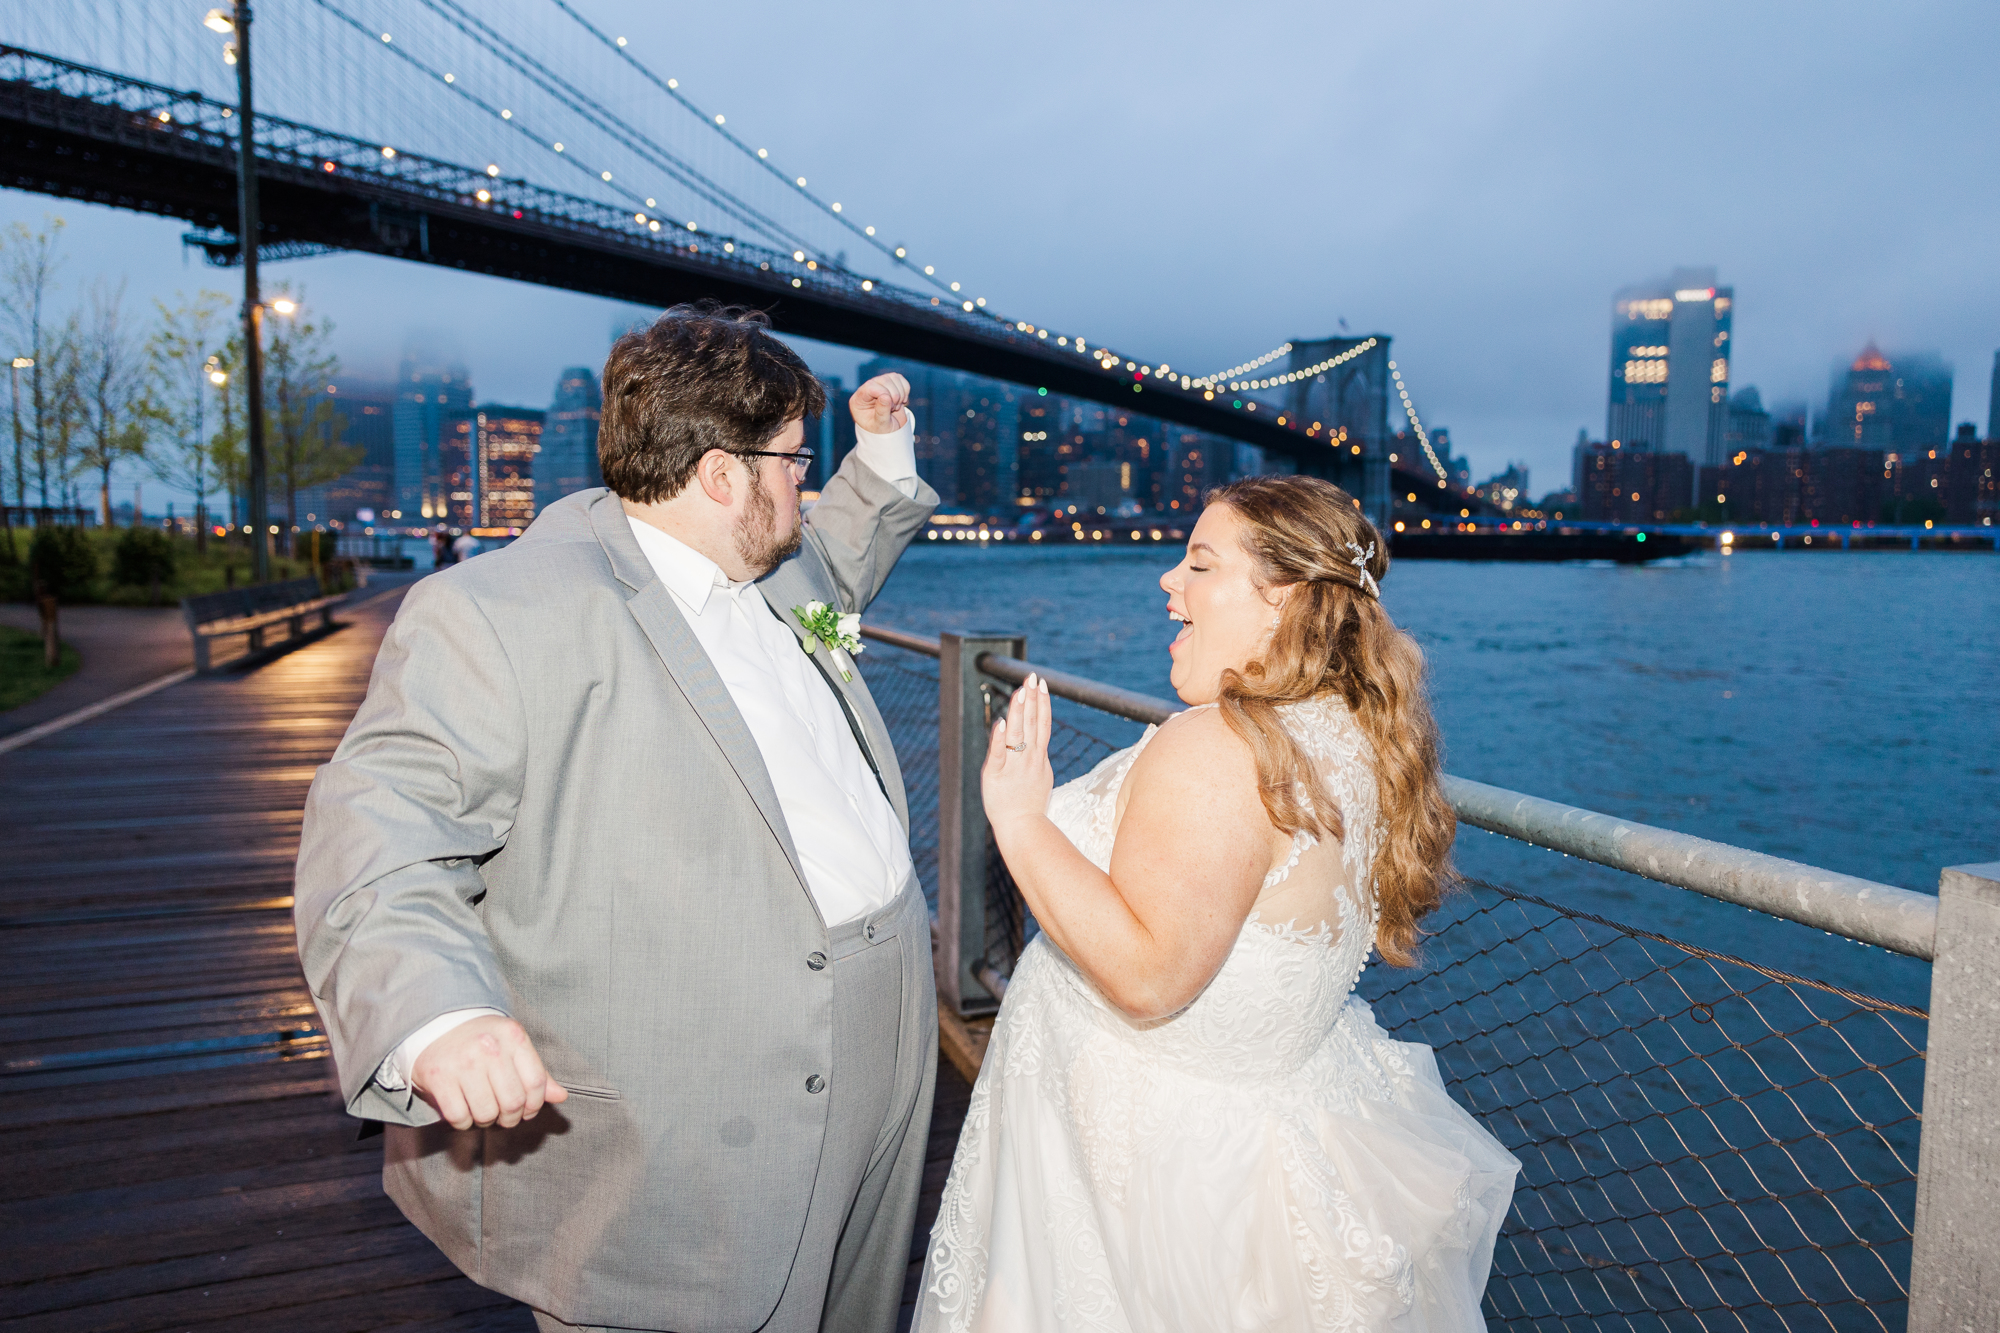 Breath-Taking Jane's Carousel Wedding in New York